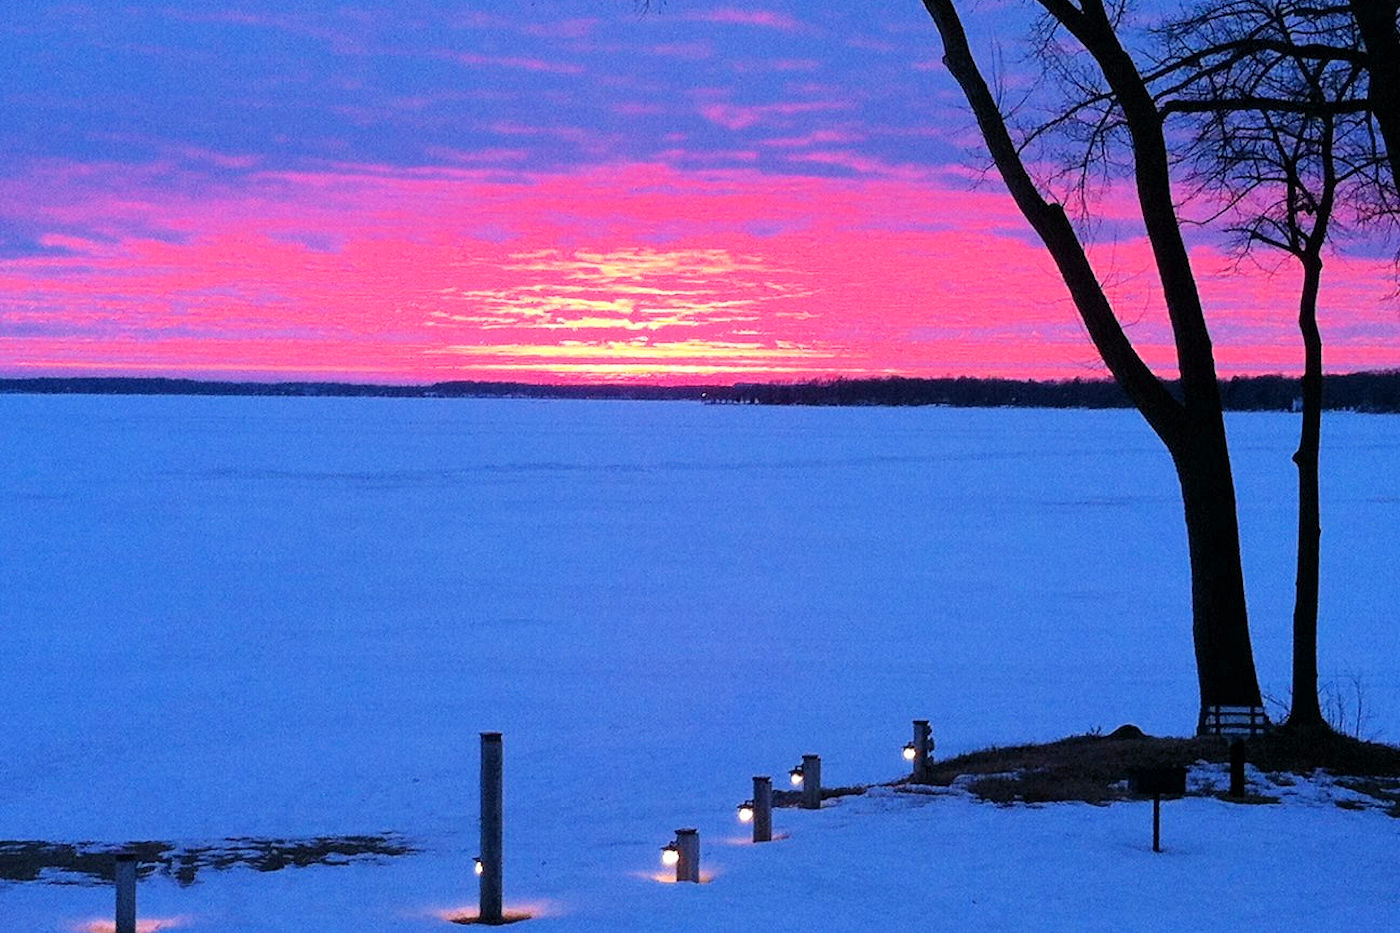 March 12, 2014 Big Detroit Lake Sunset at The Lodge on Lake Detroit